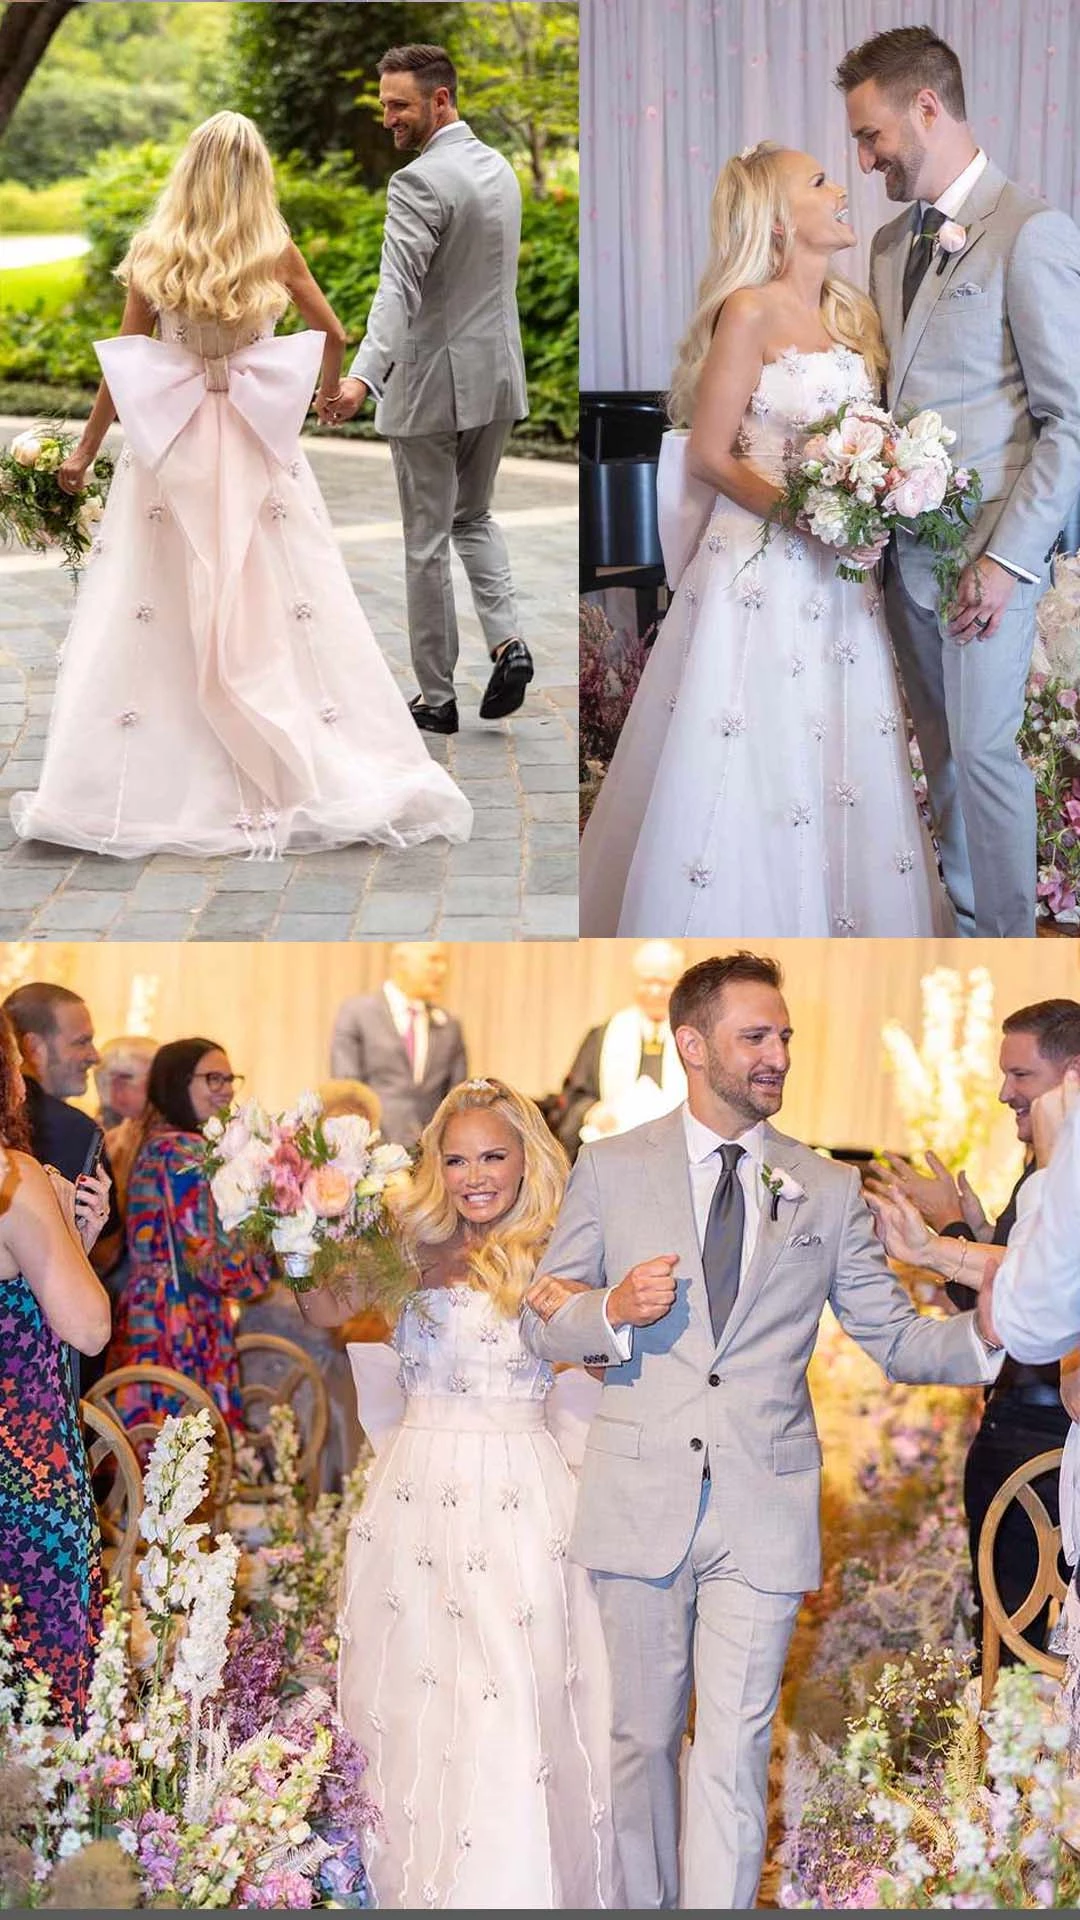 Kristin Chenoweth on Her Nontraditional Wedding Dress to Marry Josh Bryant